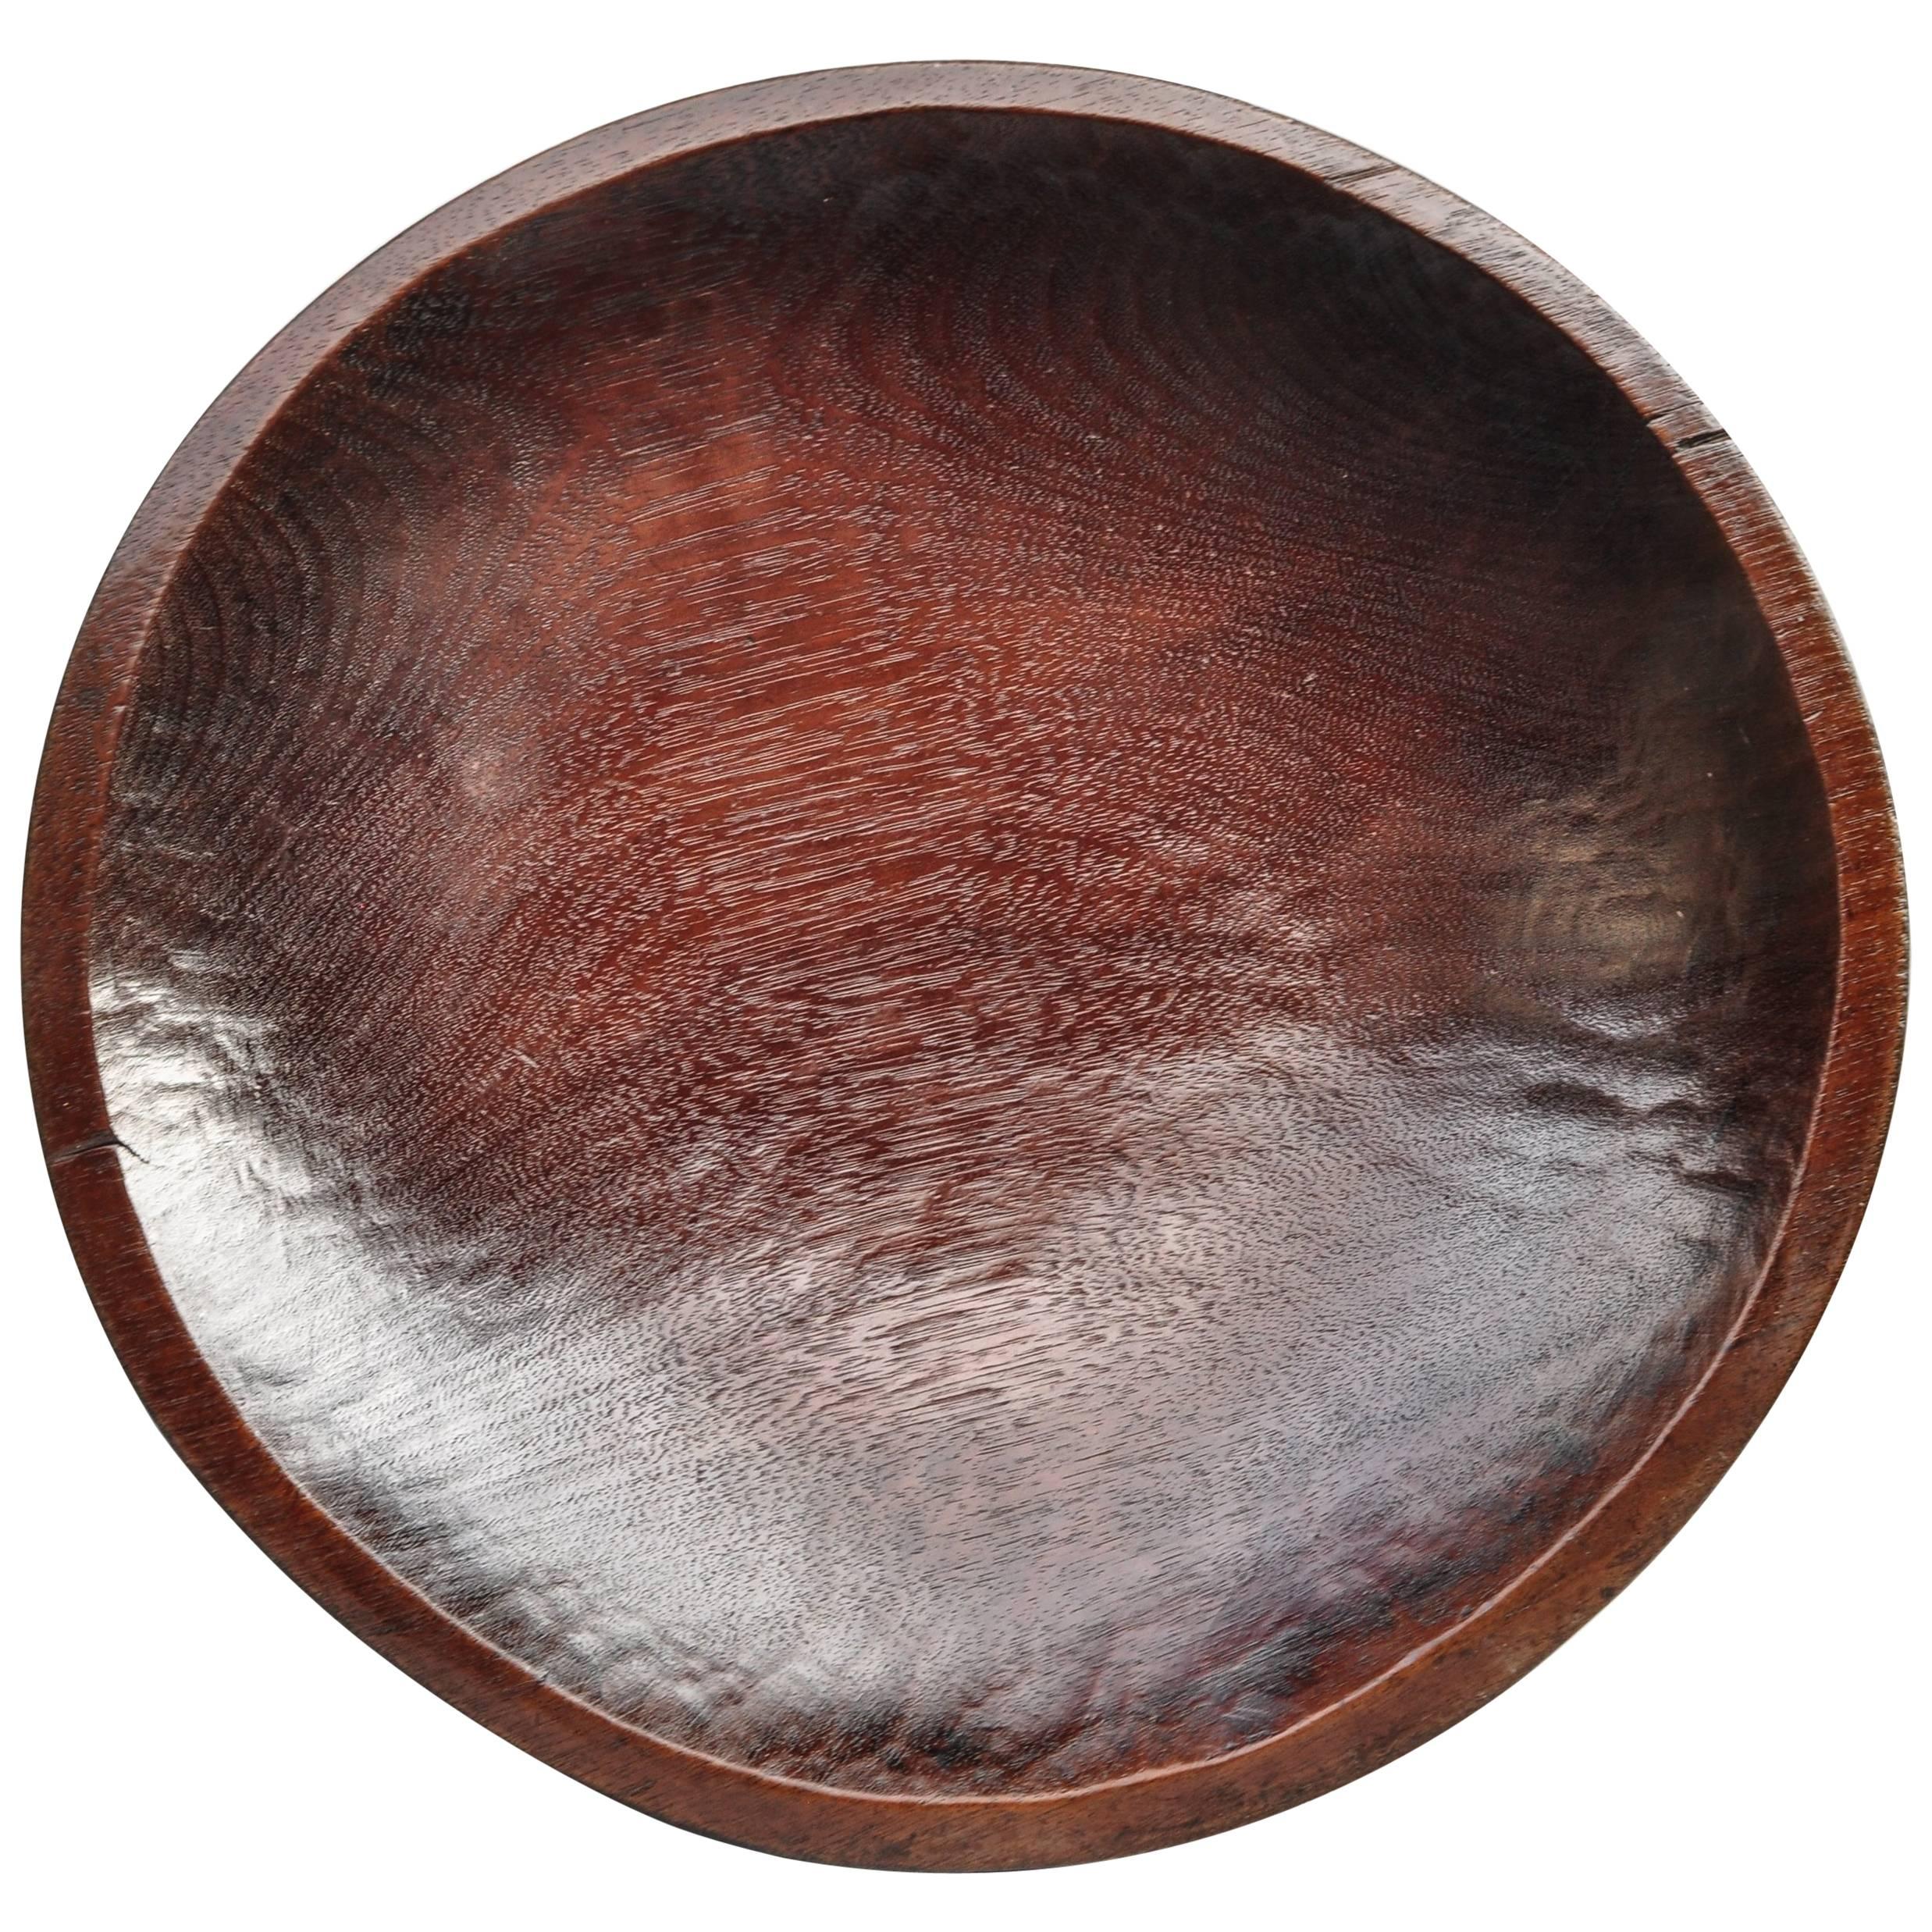 Large Decorative Wood Bowl from Lampung, Sumatra, Merbau Wood, Mid-20th Century